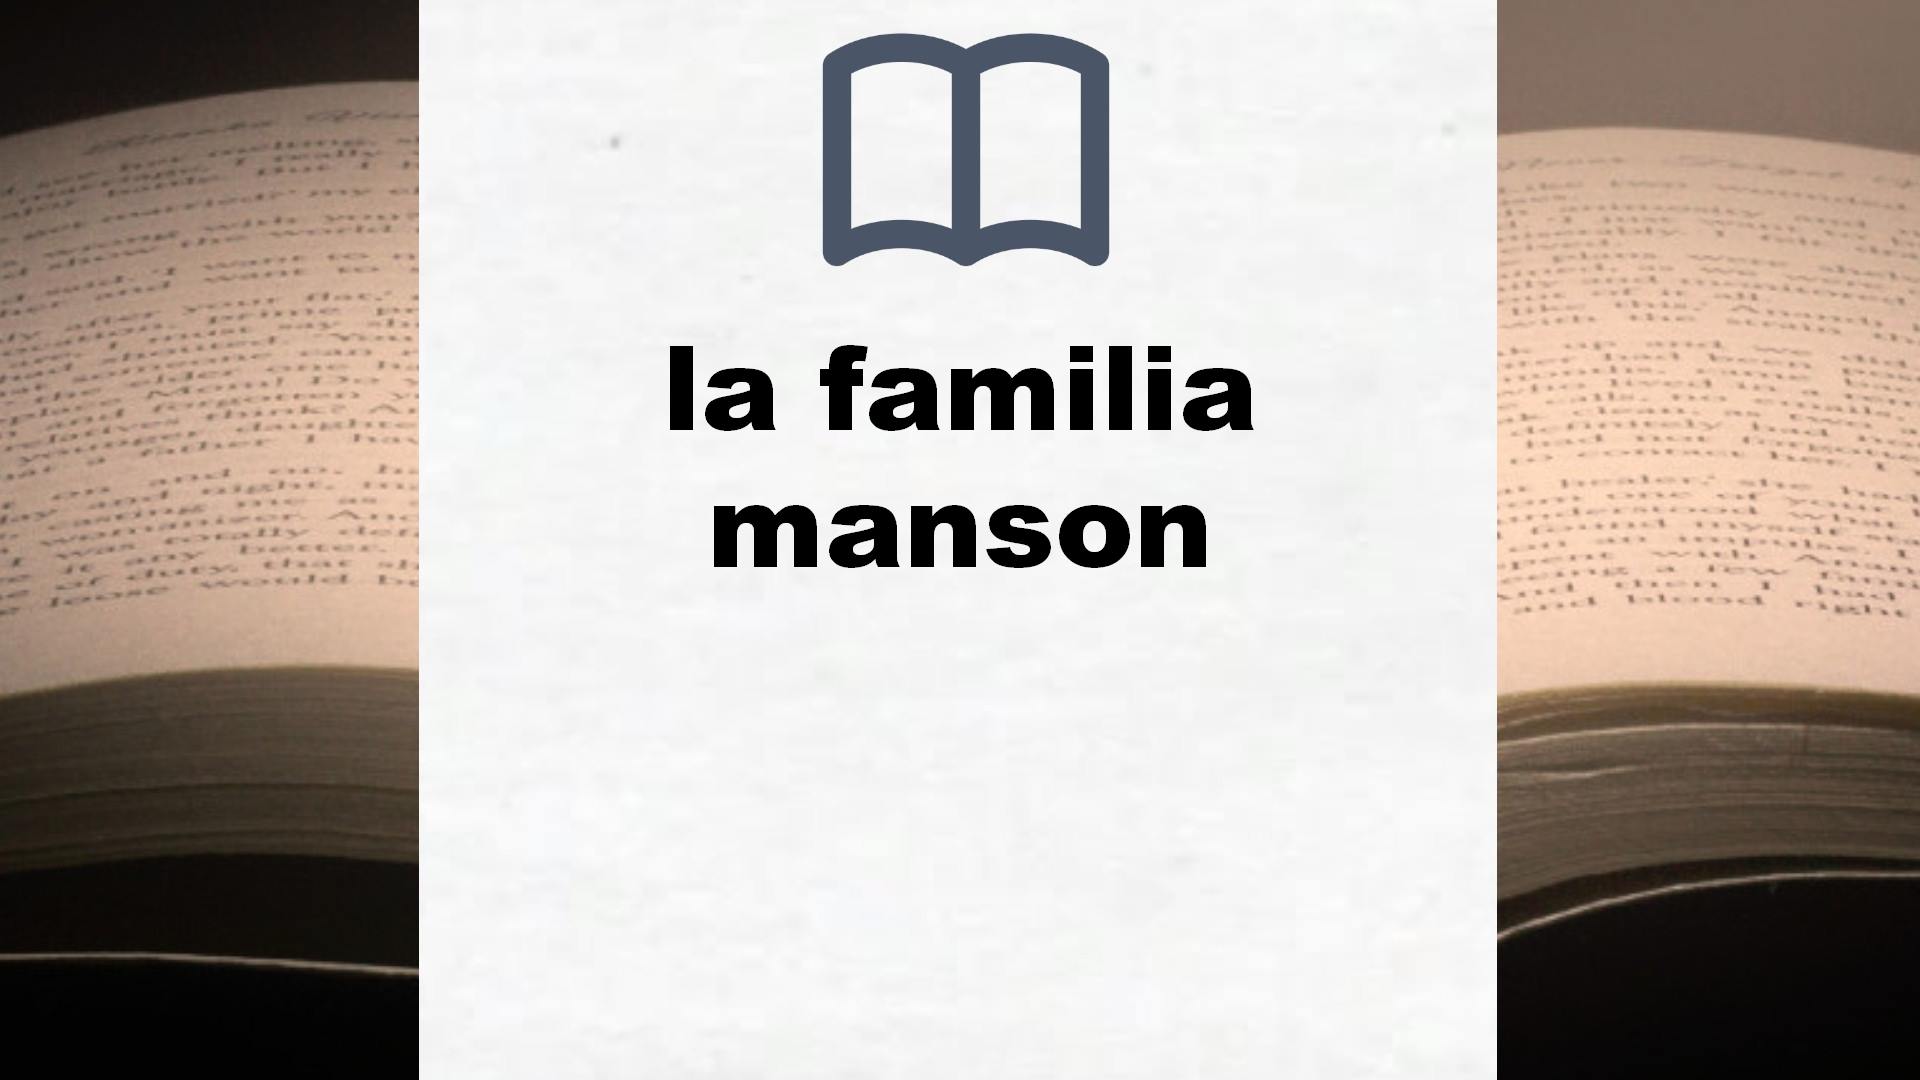 Libros sobre la familia manson